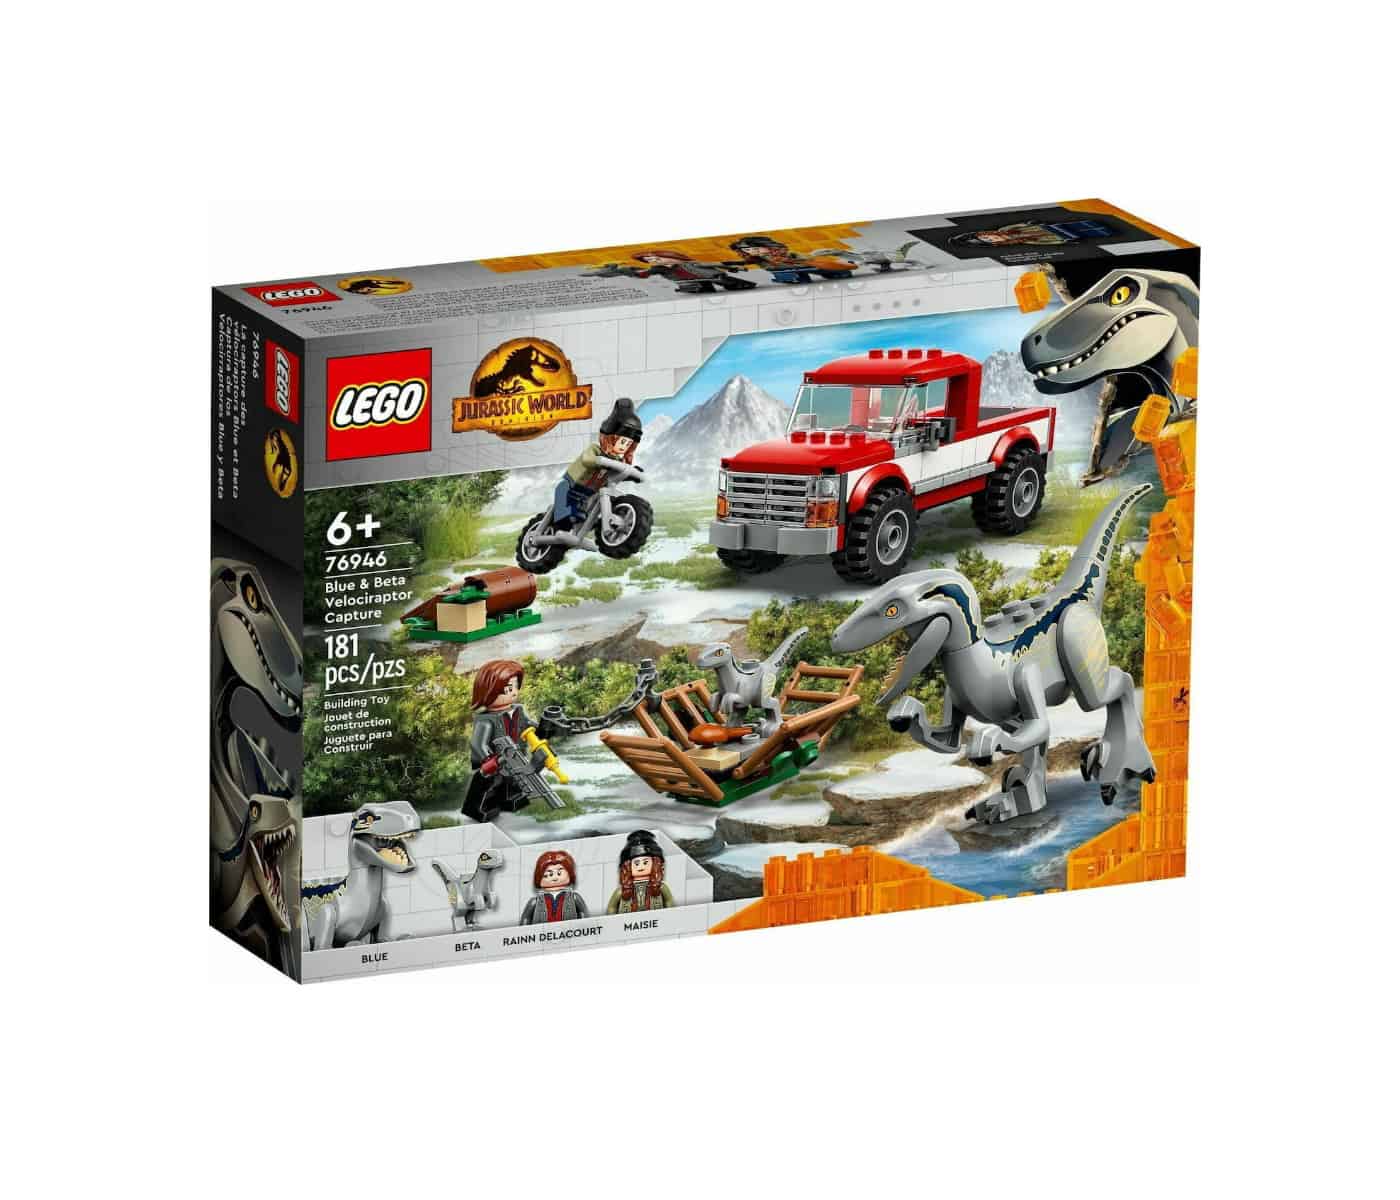 Lego Jurassic World - Blue & Beta Velociraptor